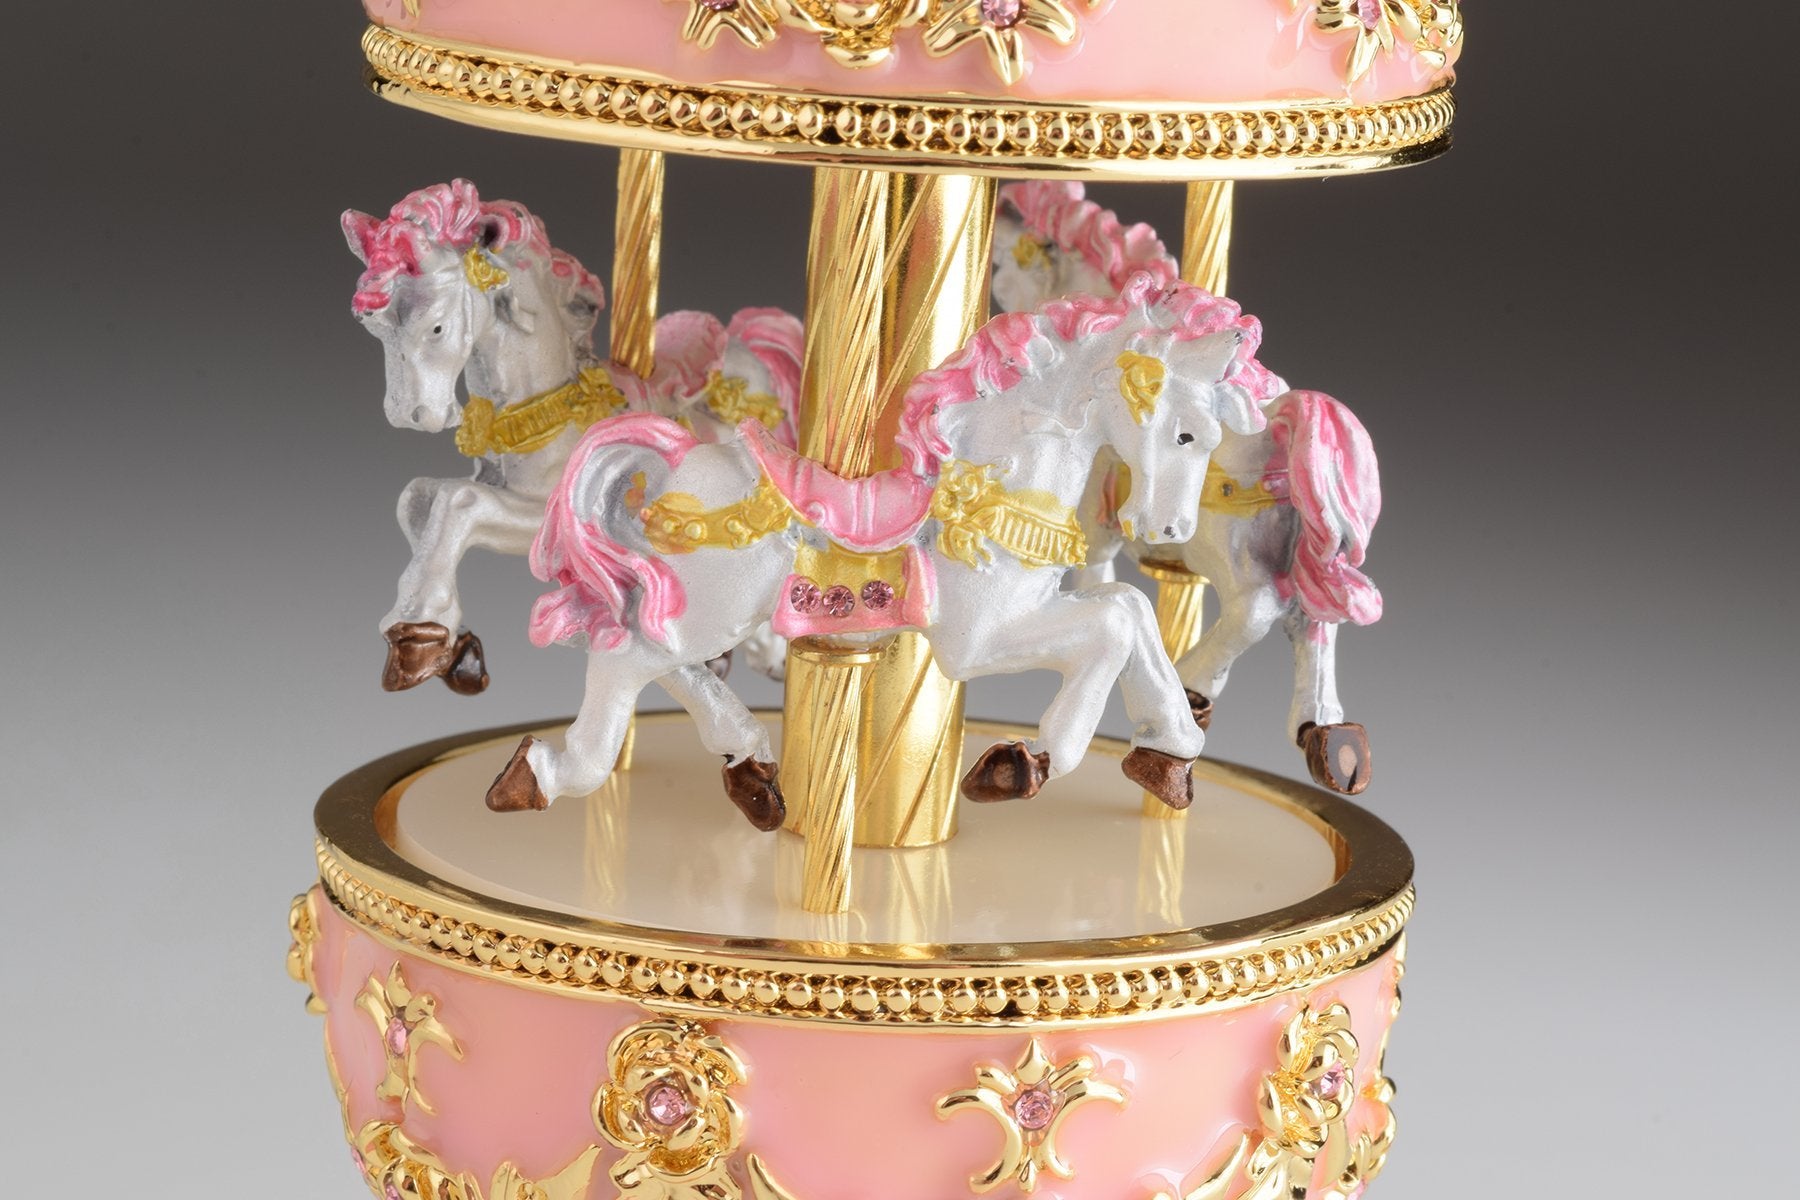 Keren Kopal Pink Carousel Faberge Egg with White Royal Horses  124.00